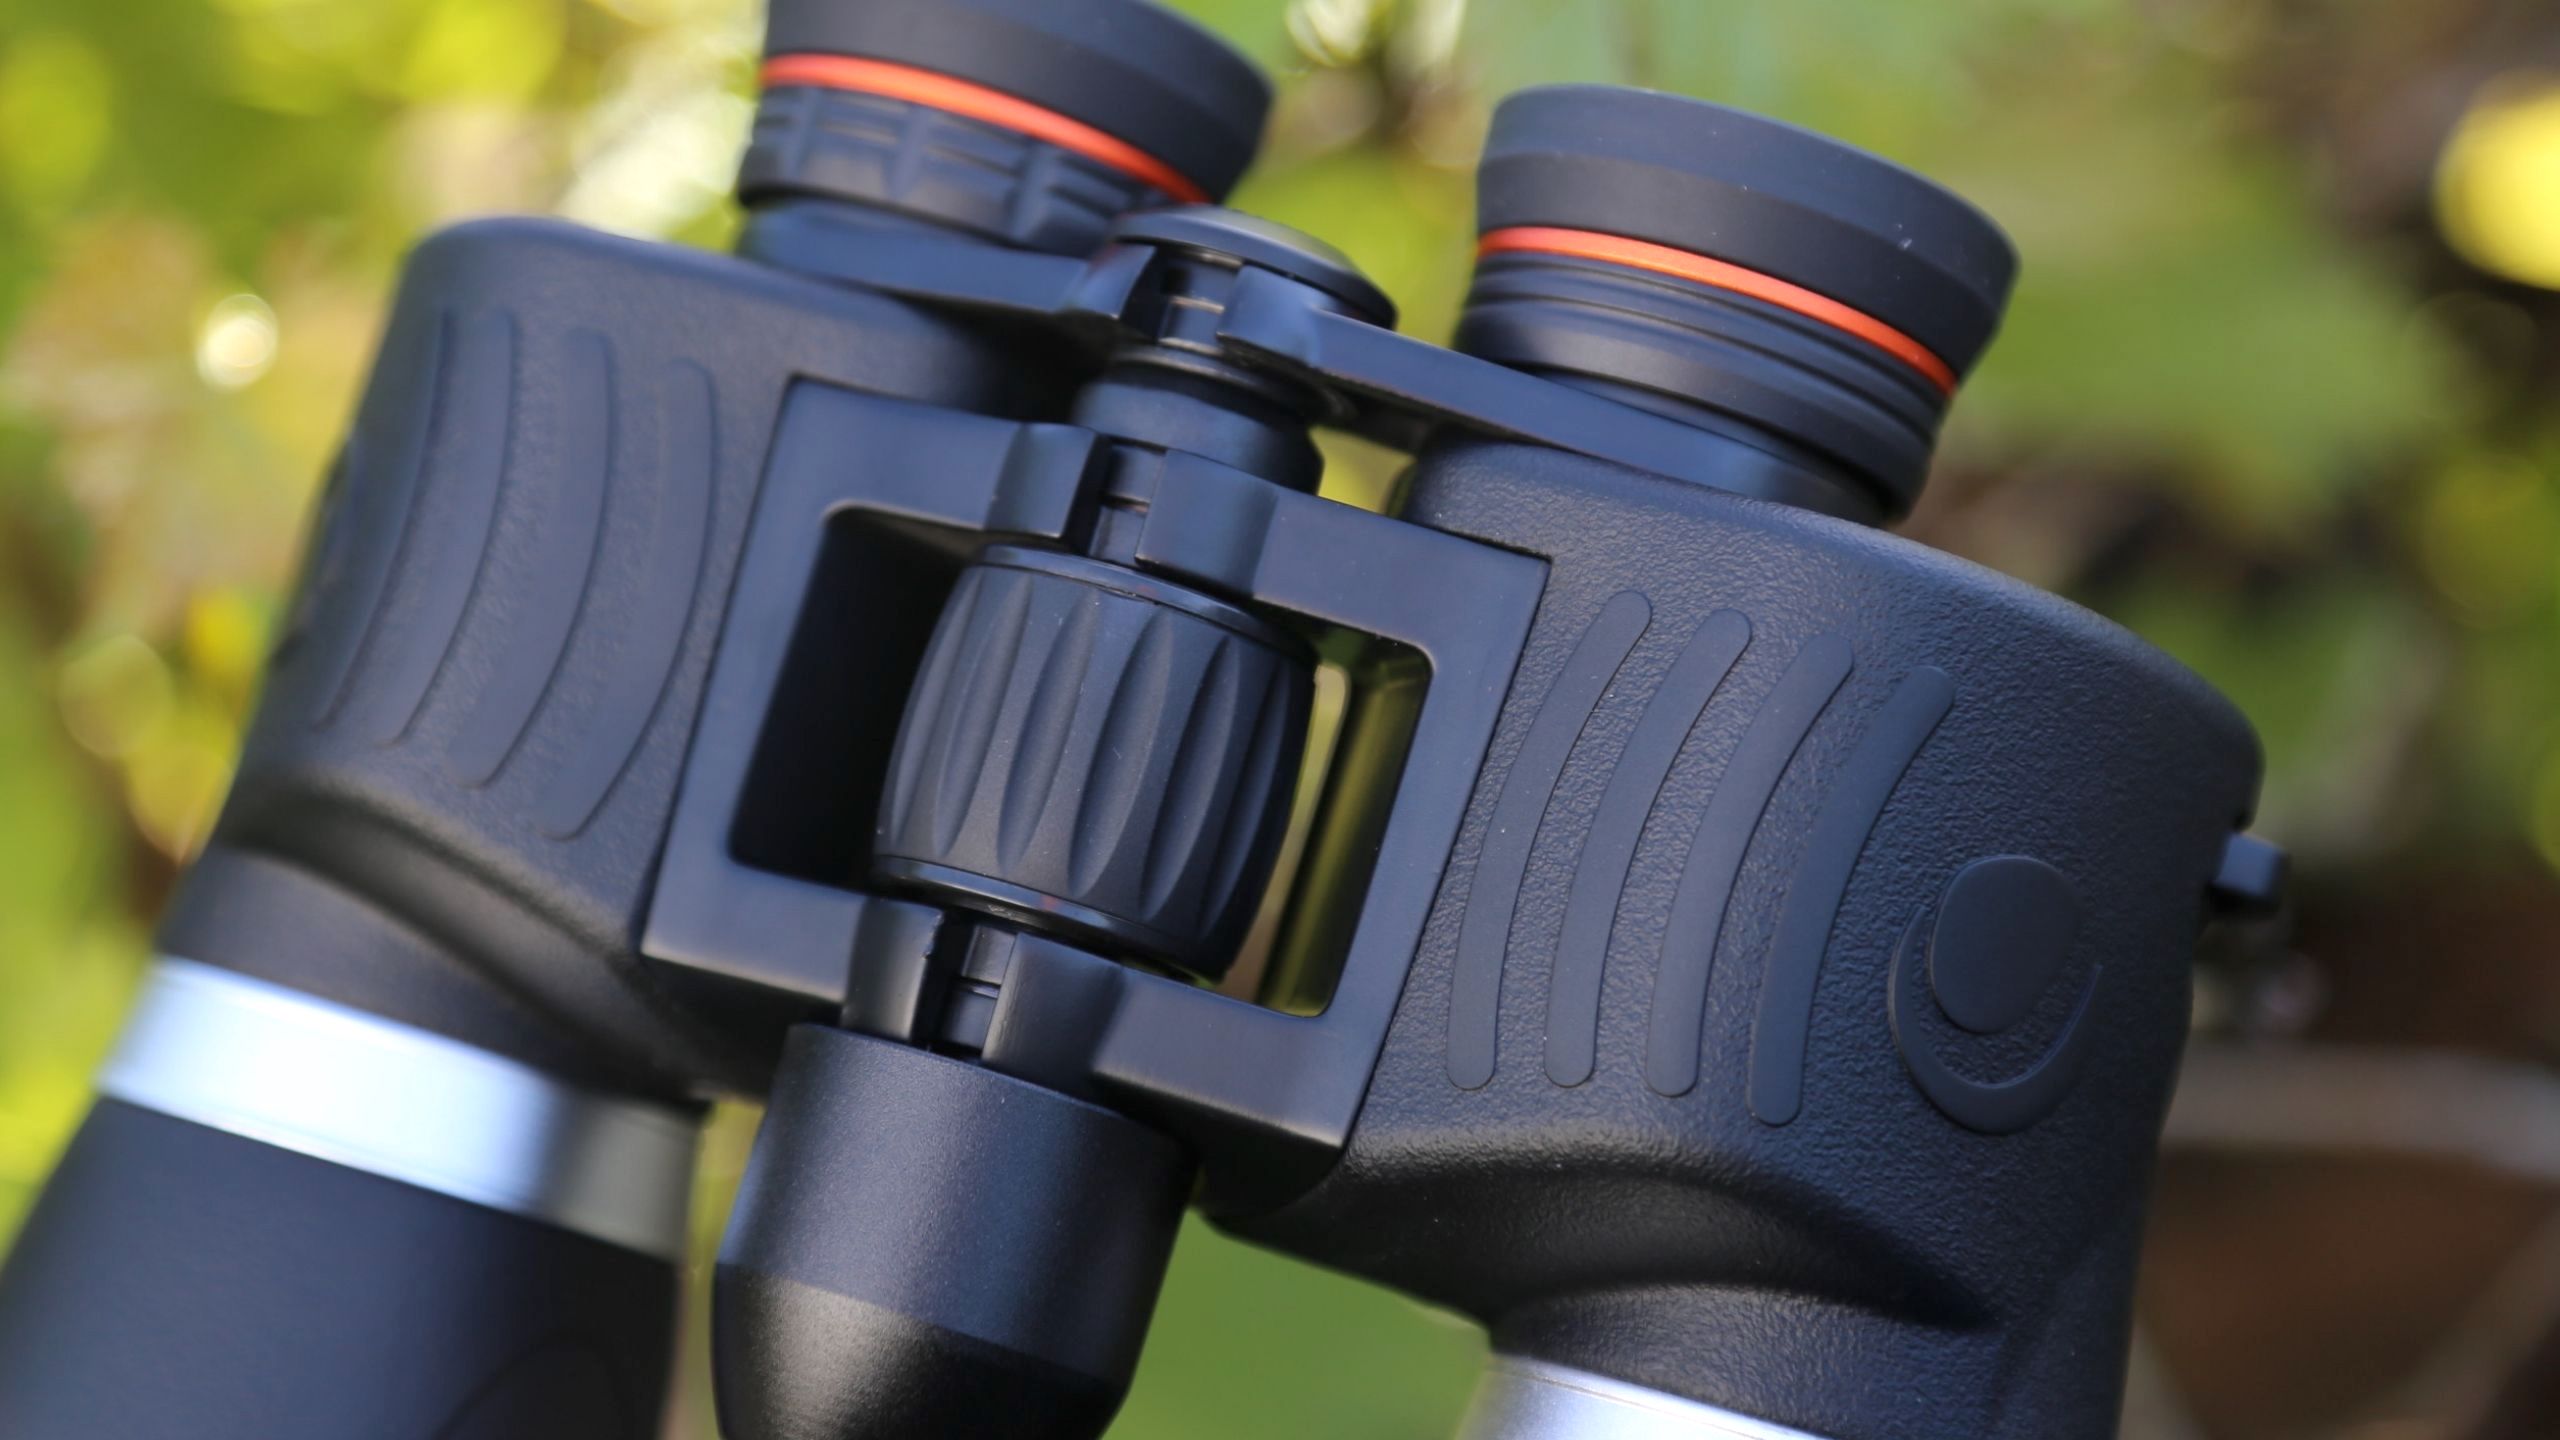 Celestron skymaster pro 20x80 binoculars close-up